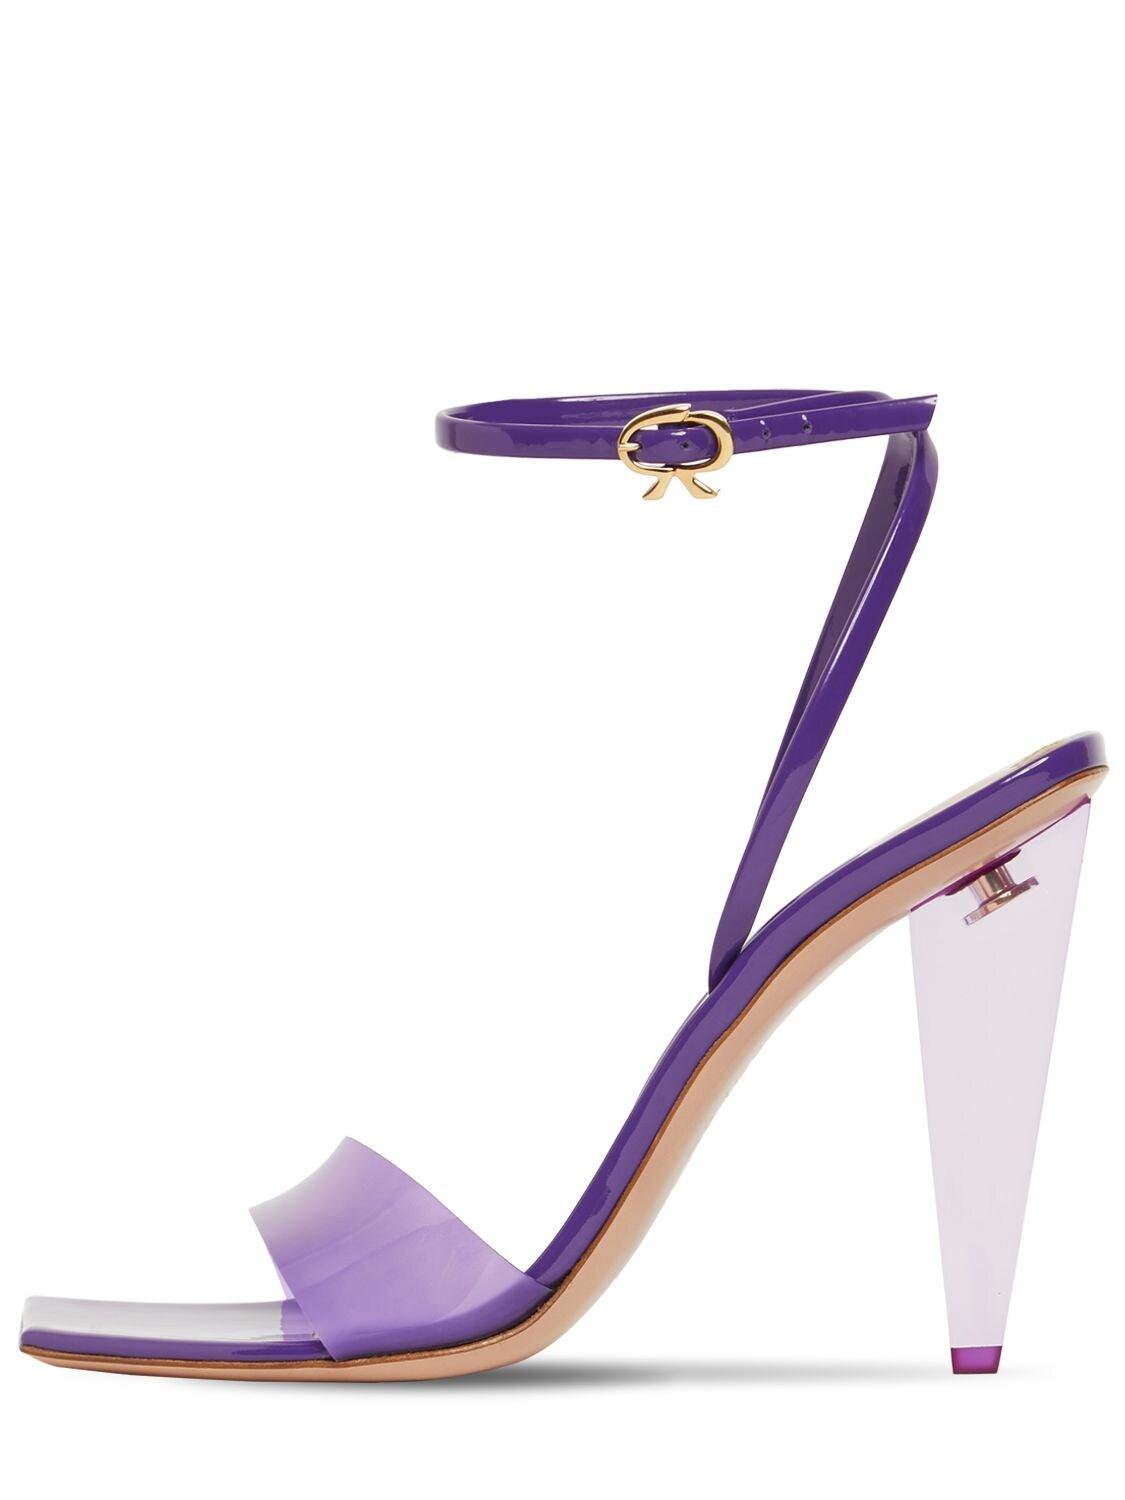 Gianvito Rossi 105mm Odyssey Plexi & Patent Sandals in Violet 